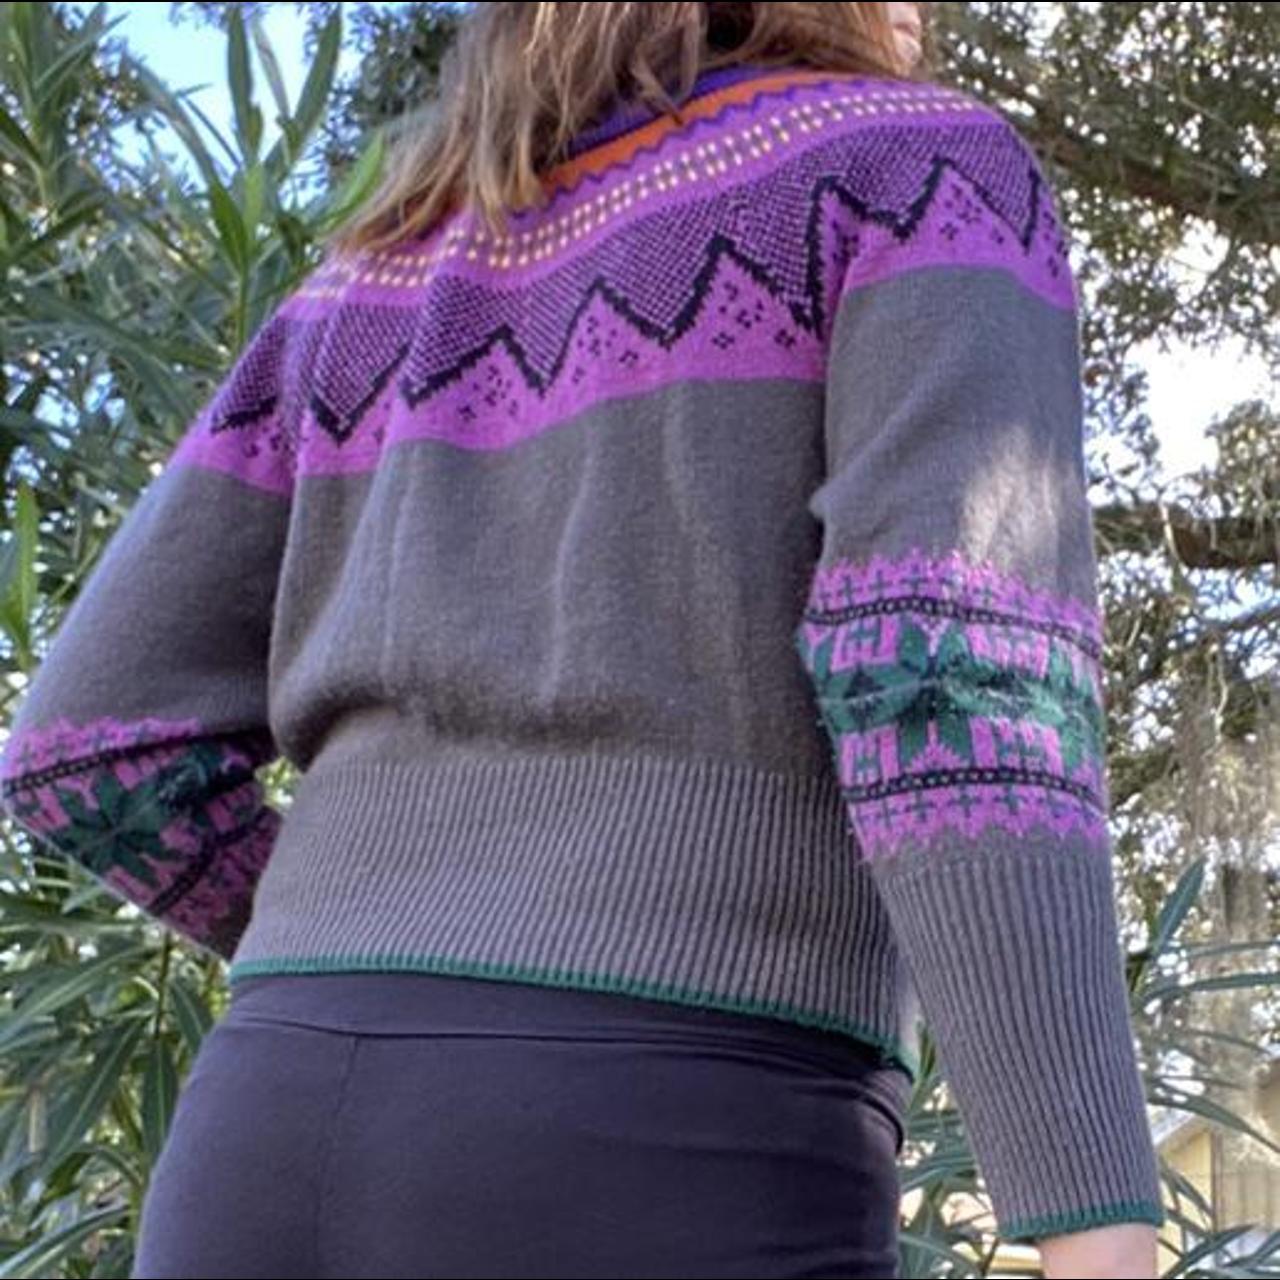 Product Image 2 - Vintage Cristina Turtleneck Colorful Sweater!
Adorable